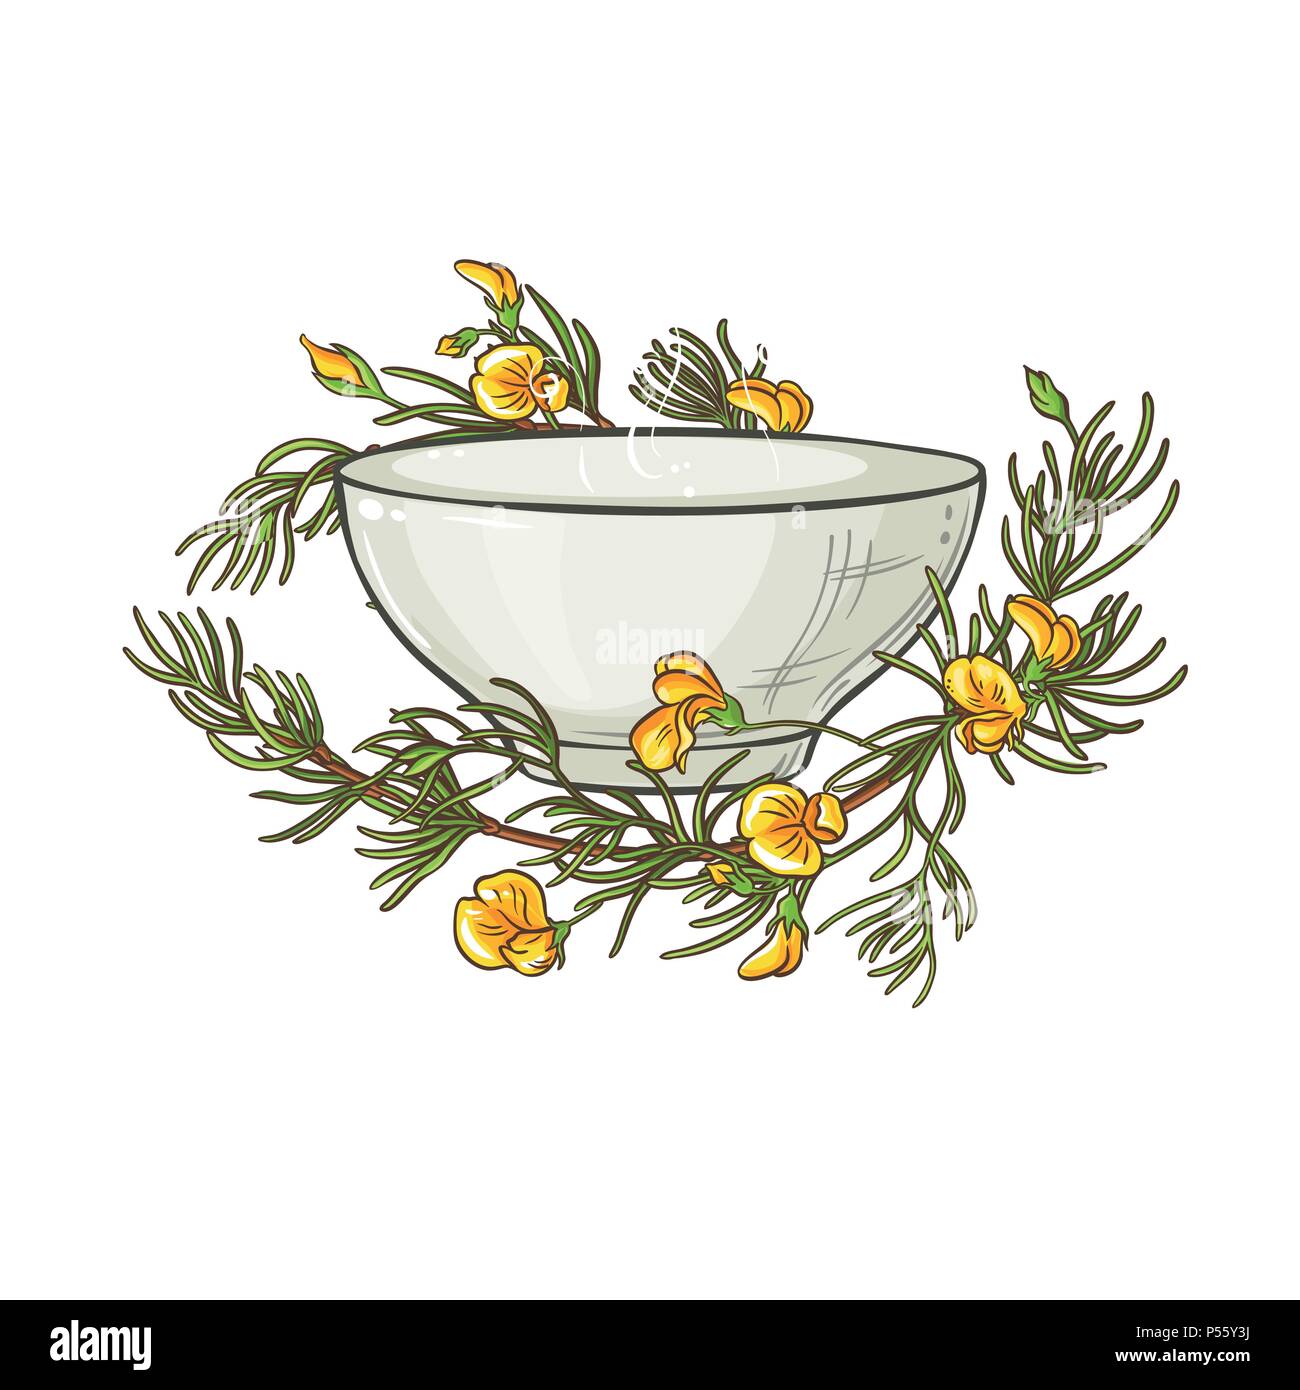 rooibos tea in tea bowl illustration on whte background Stock Vector